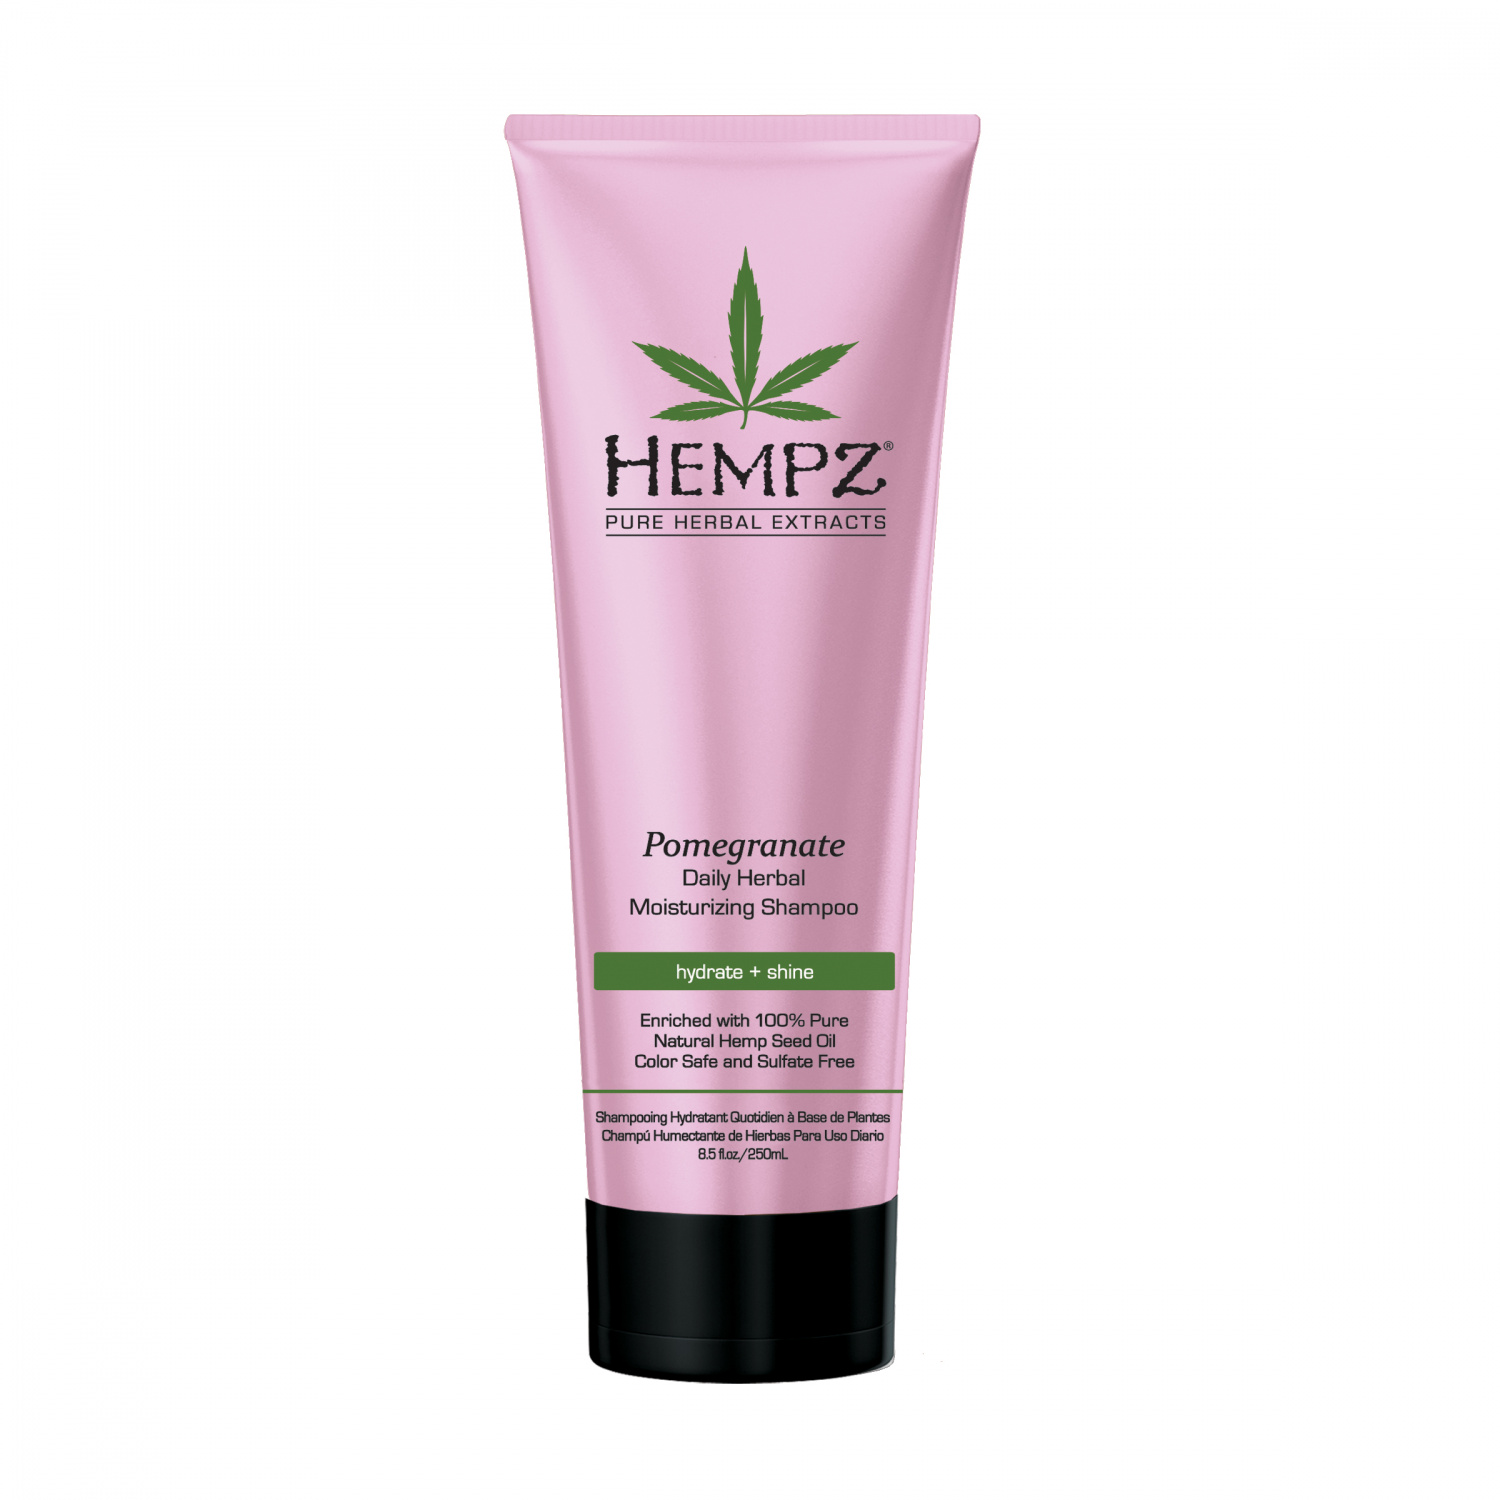 Hempz Pomegranate Moisturizing Shampoo 265ml. - интернет-магазин профессиональной косметики Spadream, изображение 17418